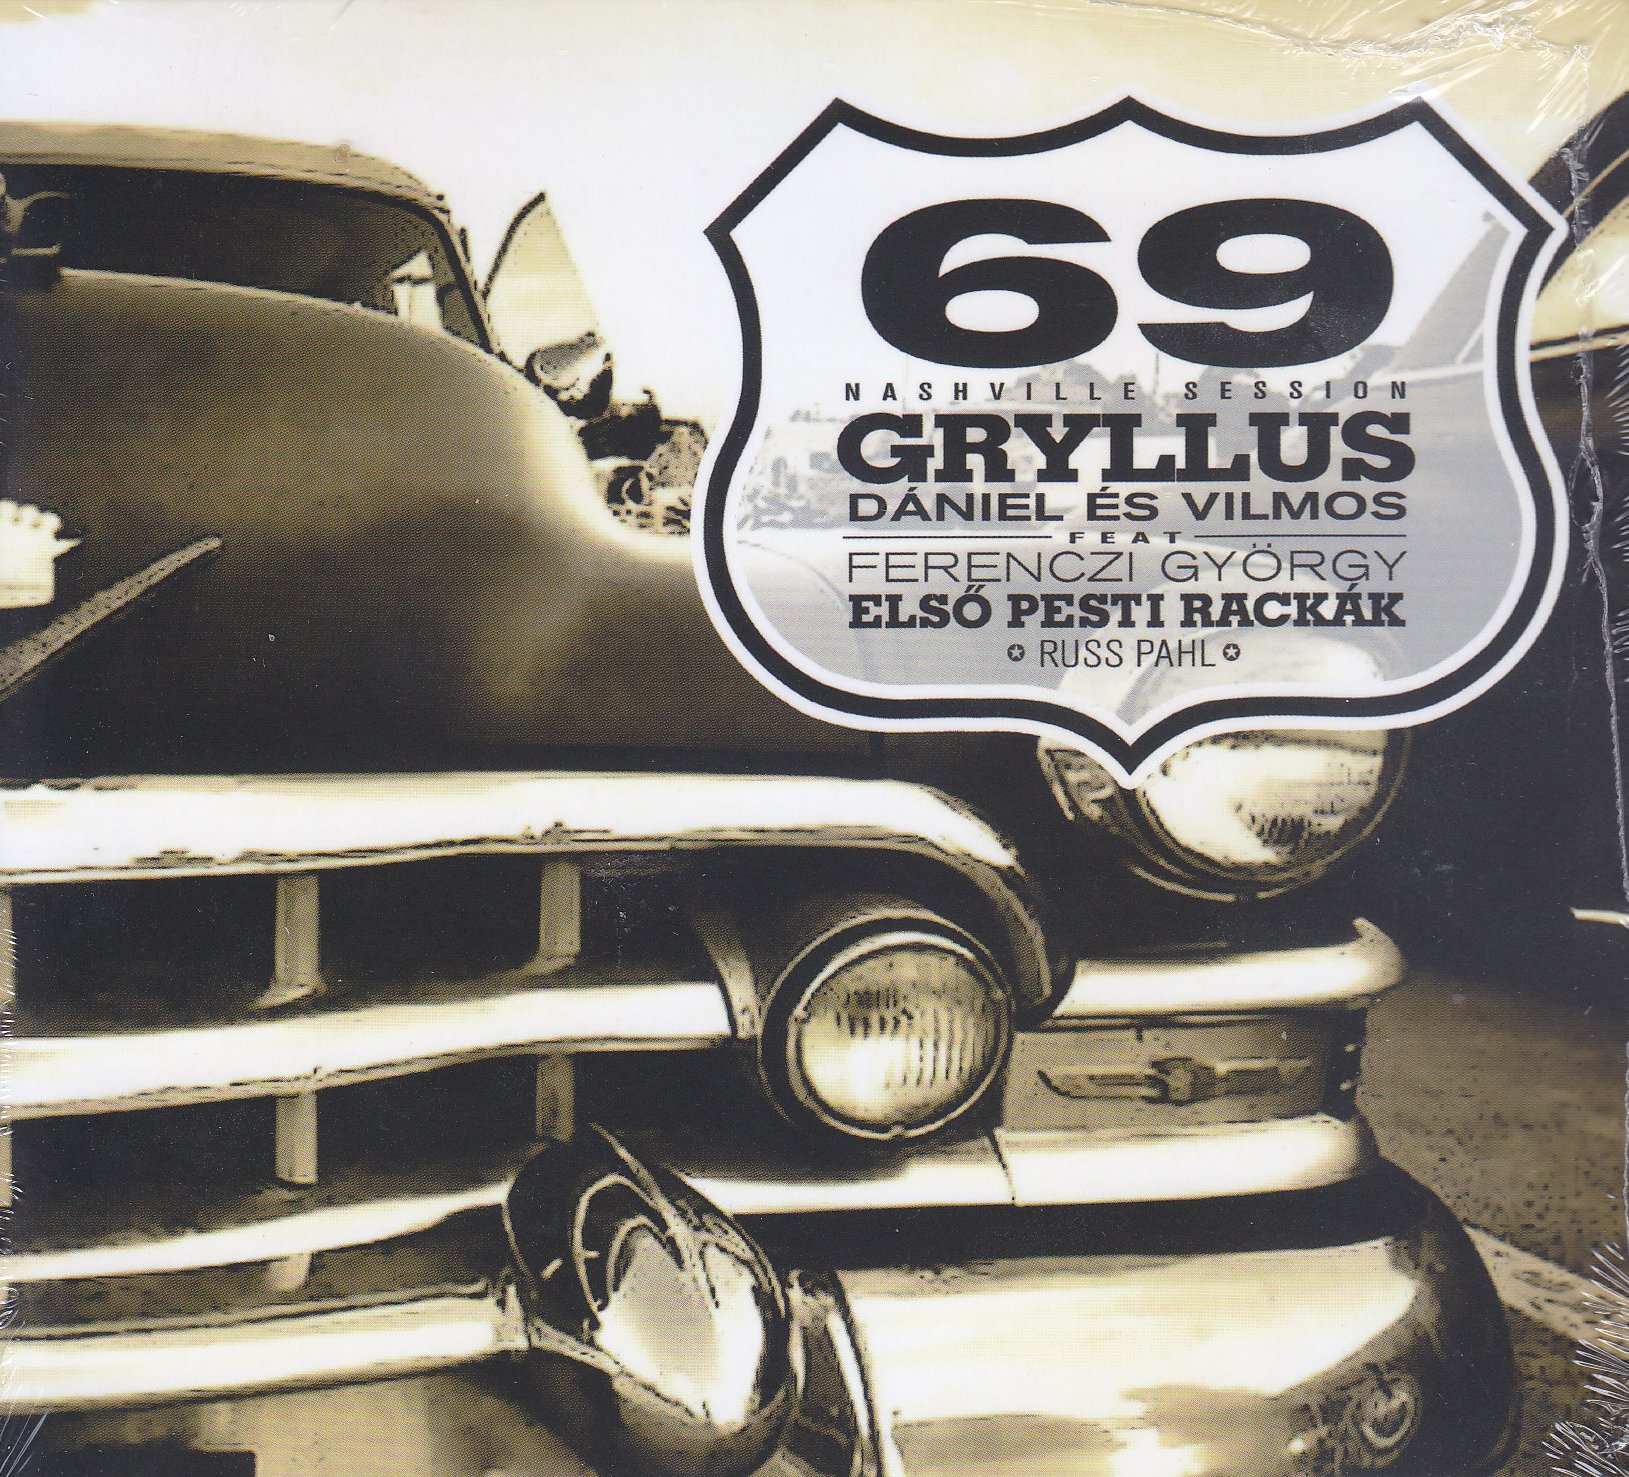 Gryllus Vilmos / Gryllus Dániel - 69 - Nashville Session